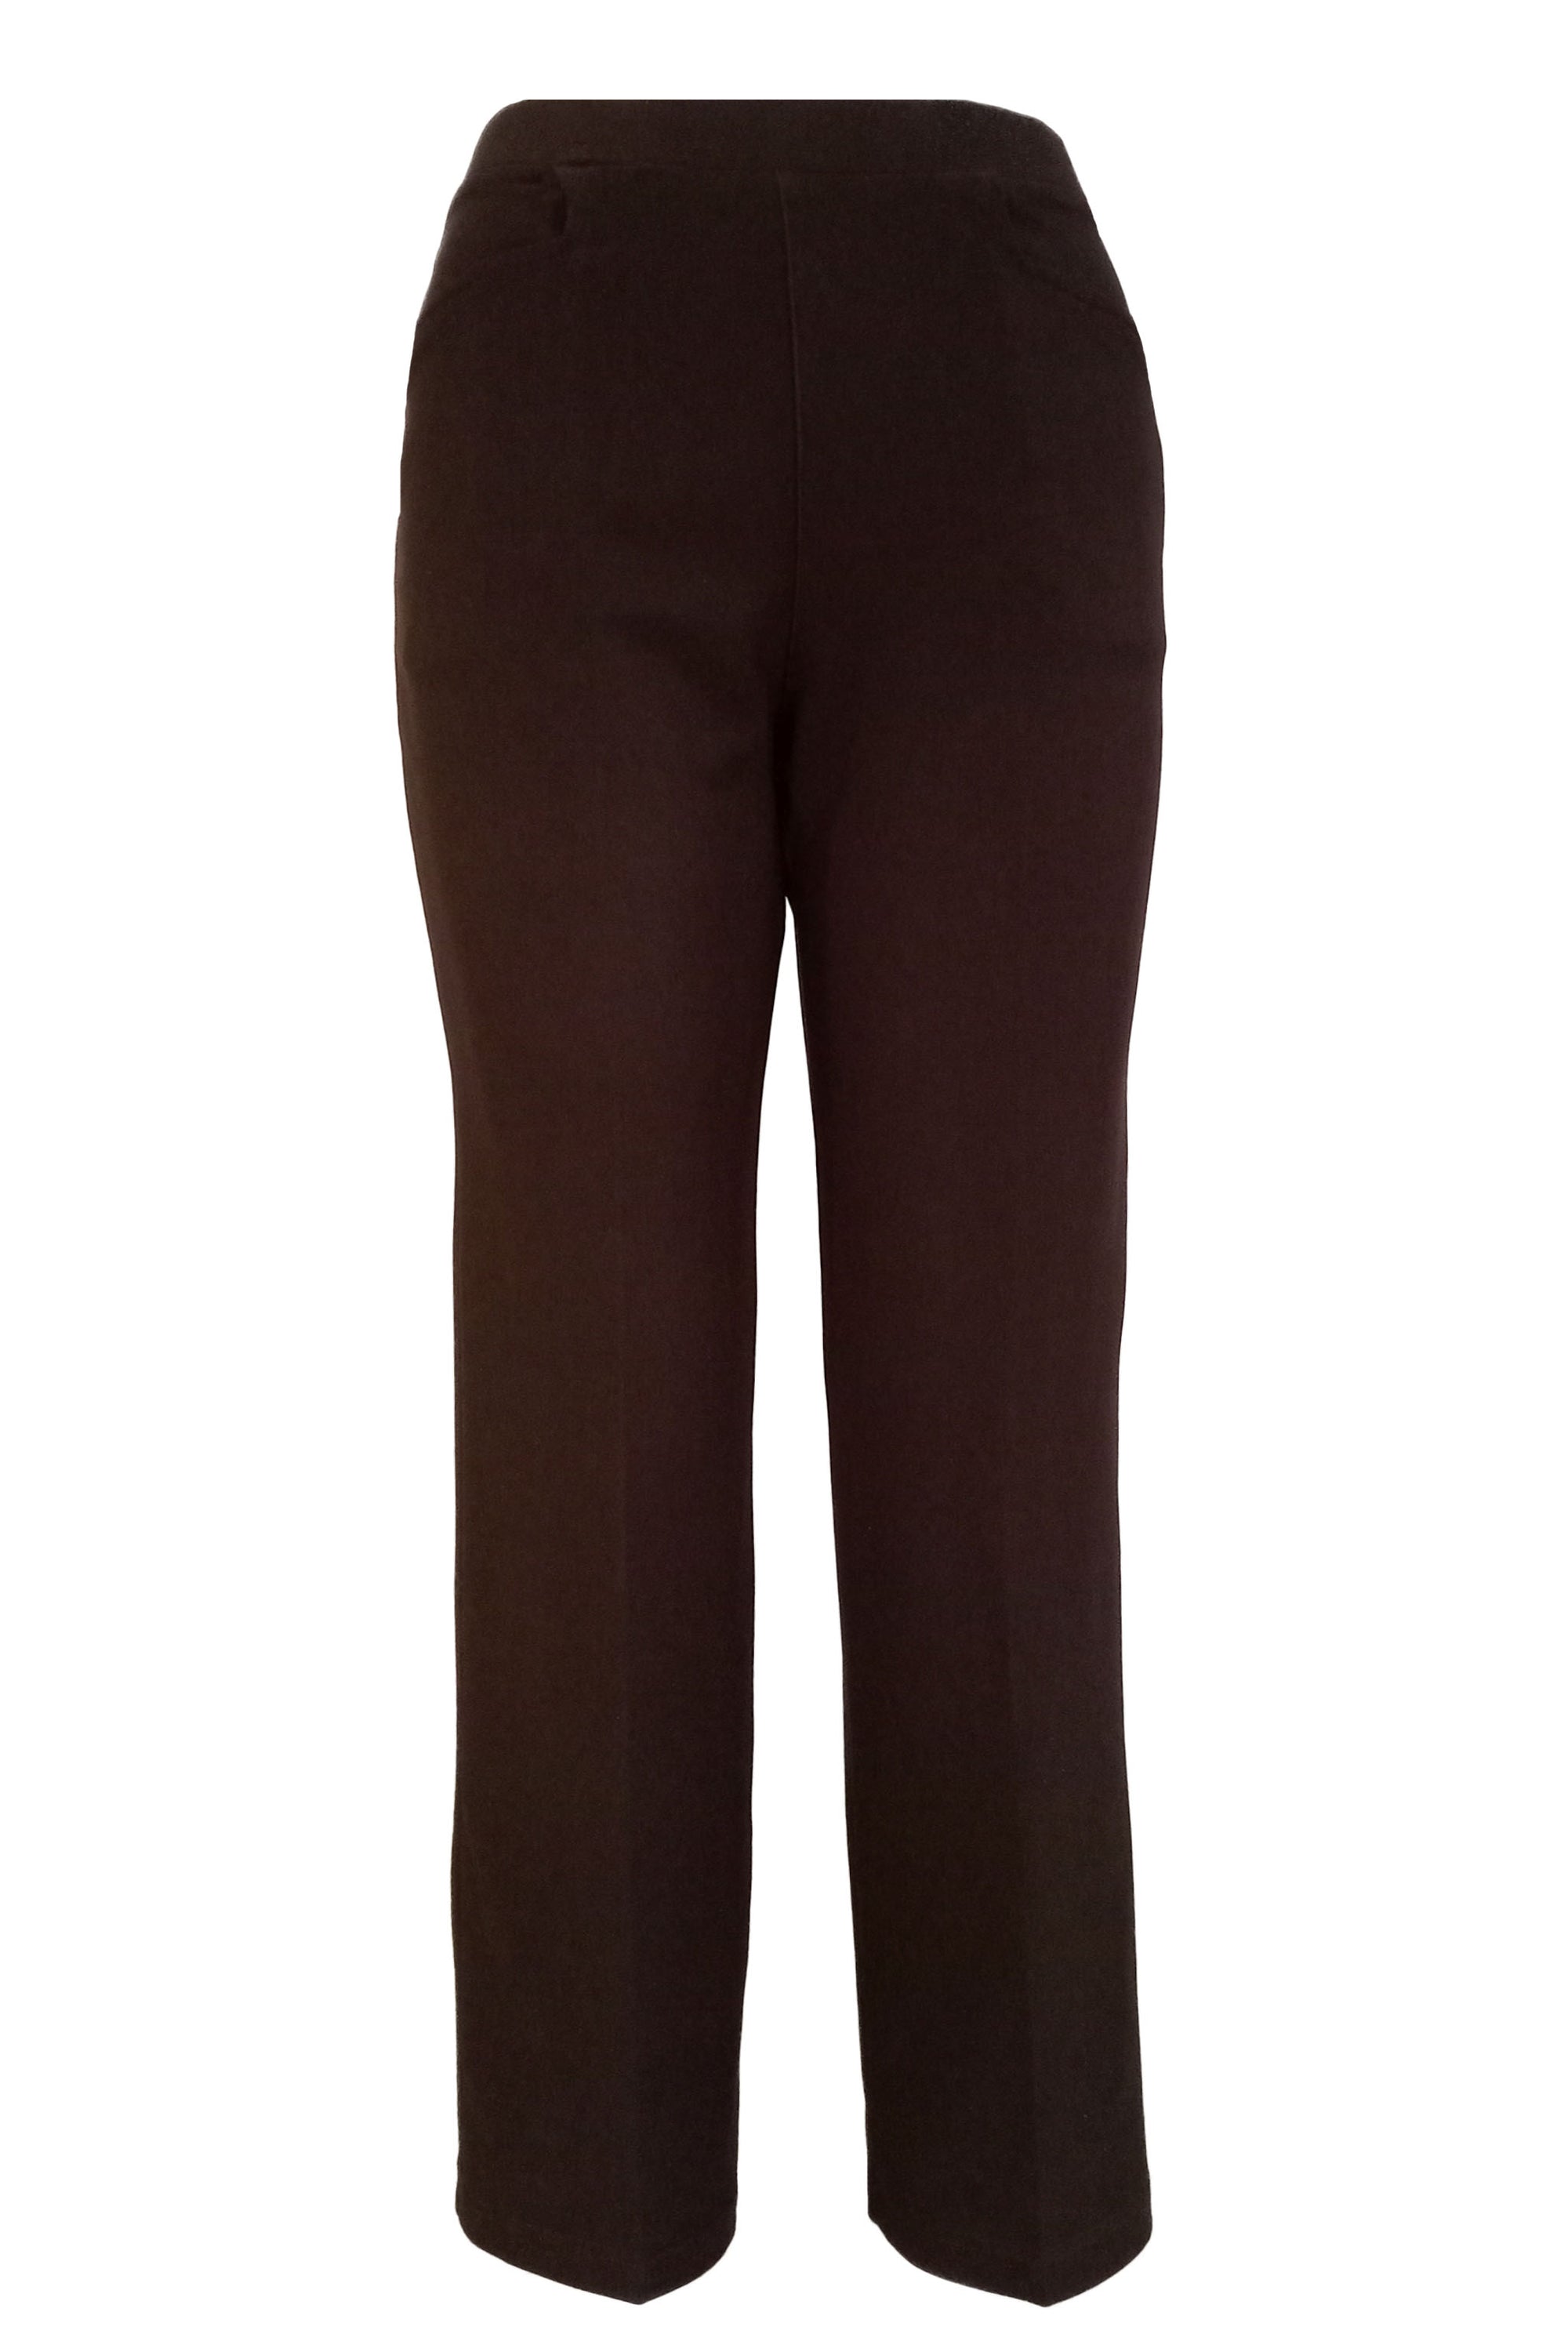 Straight Cut Plain Pants - Brown